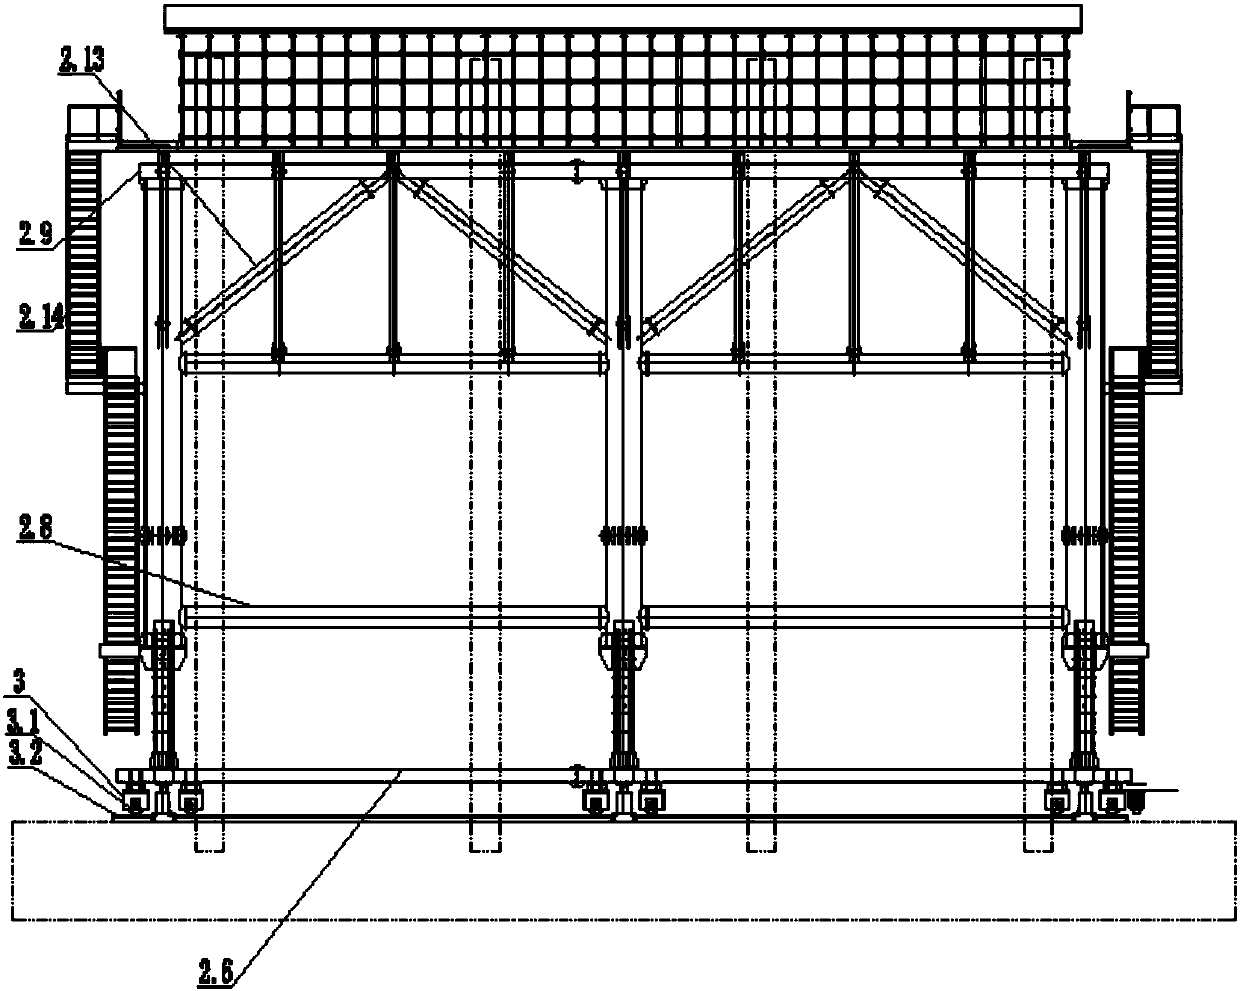 Station canopy construction movable framework and station canopy construction method